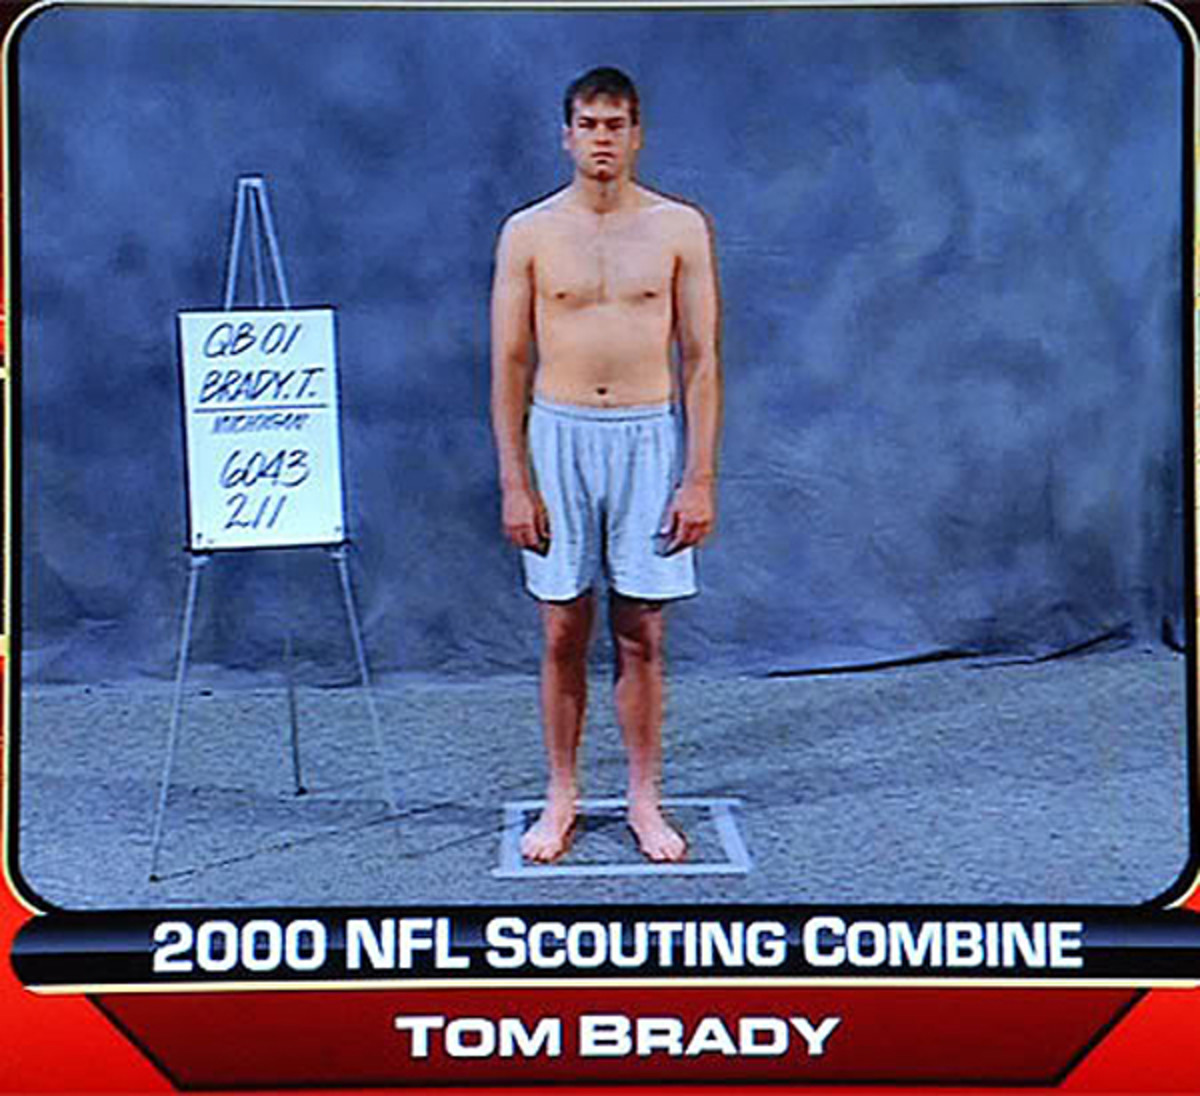 Bucs Center Wears Tom Brady NFL Combine Photo on T-Shirt to Super Bowl